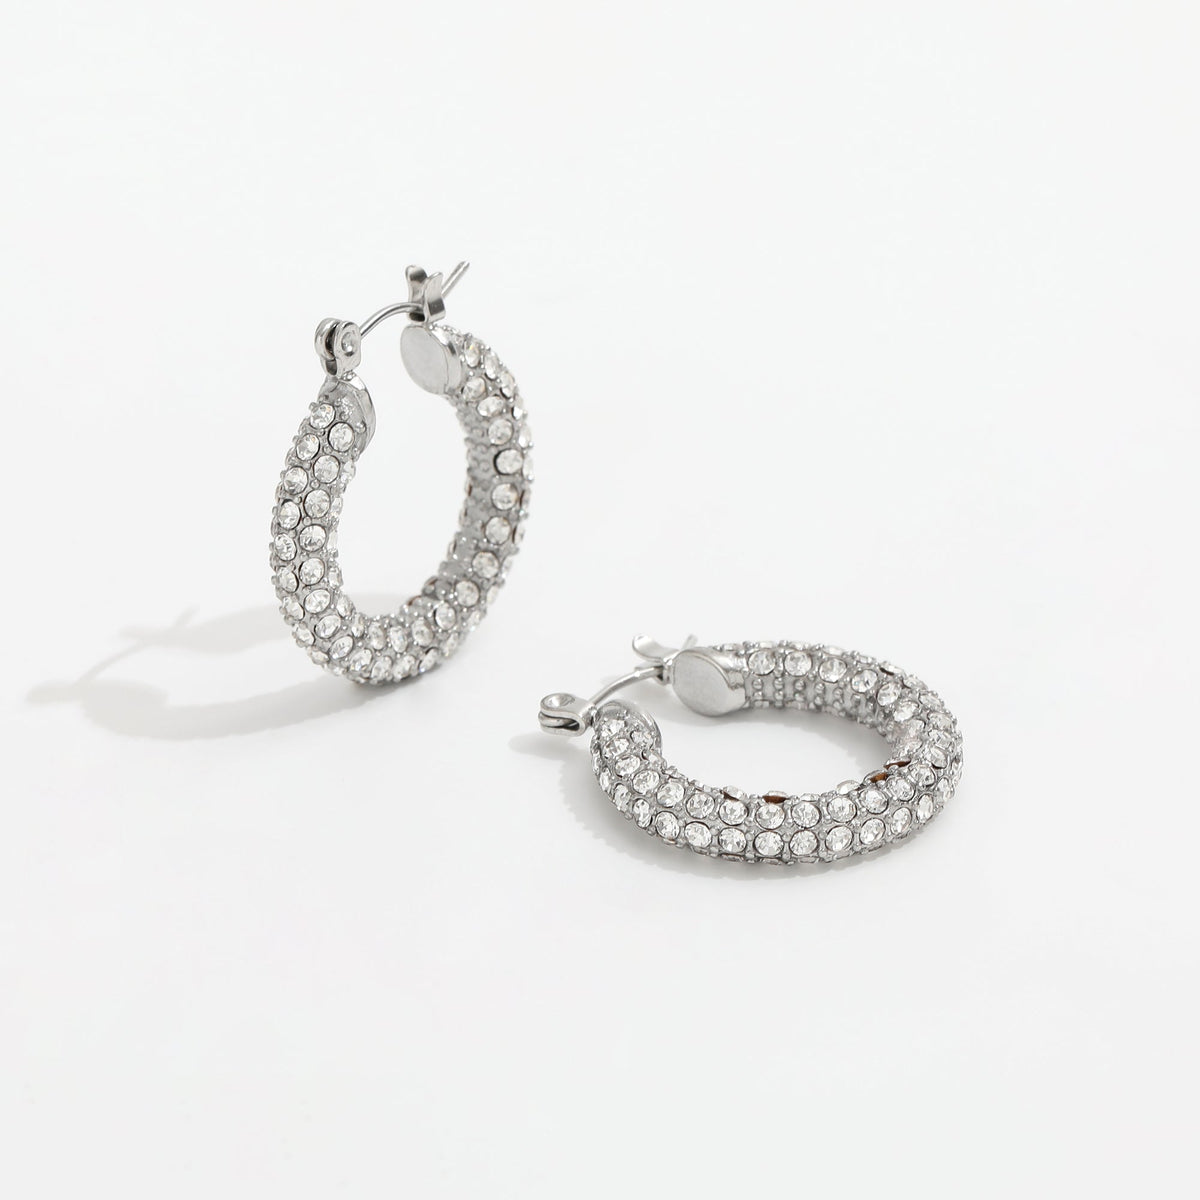 Diamond Dewdrops 18K Earrings | Hypoallergenic - Allergy Friendly - Naturally Free